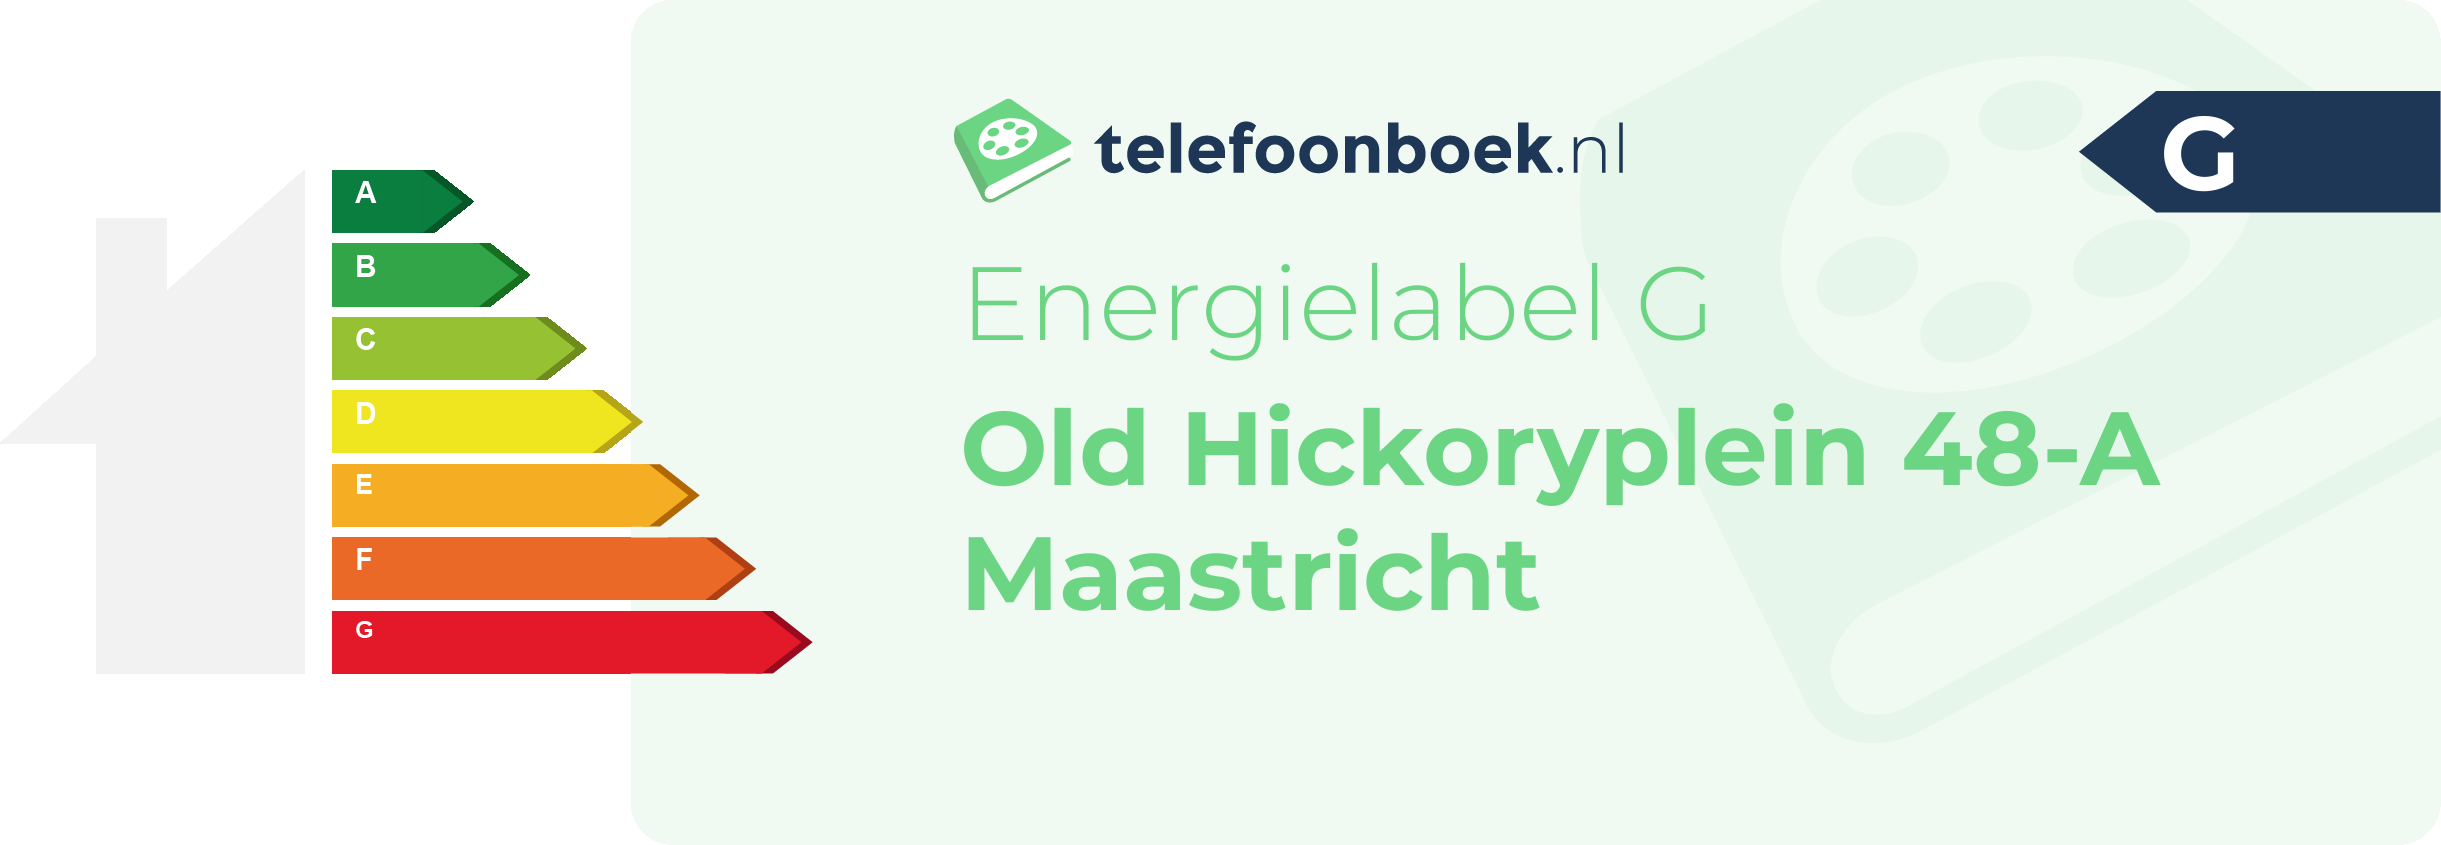 Energielabel Old Hickoryplein 48-A Maastricht